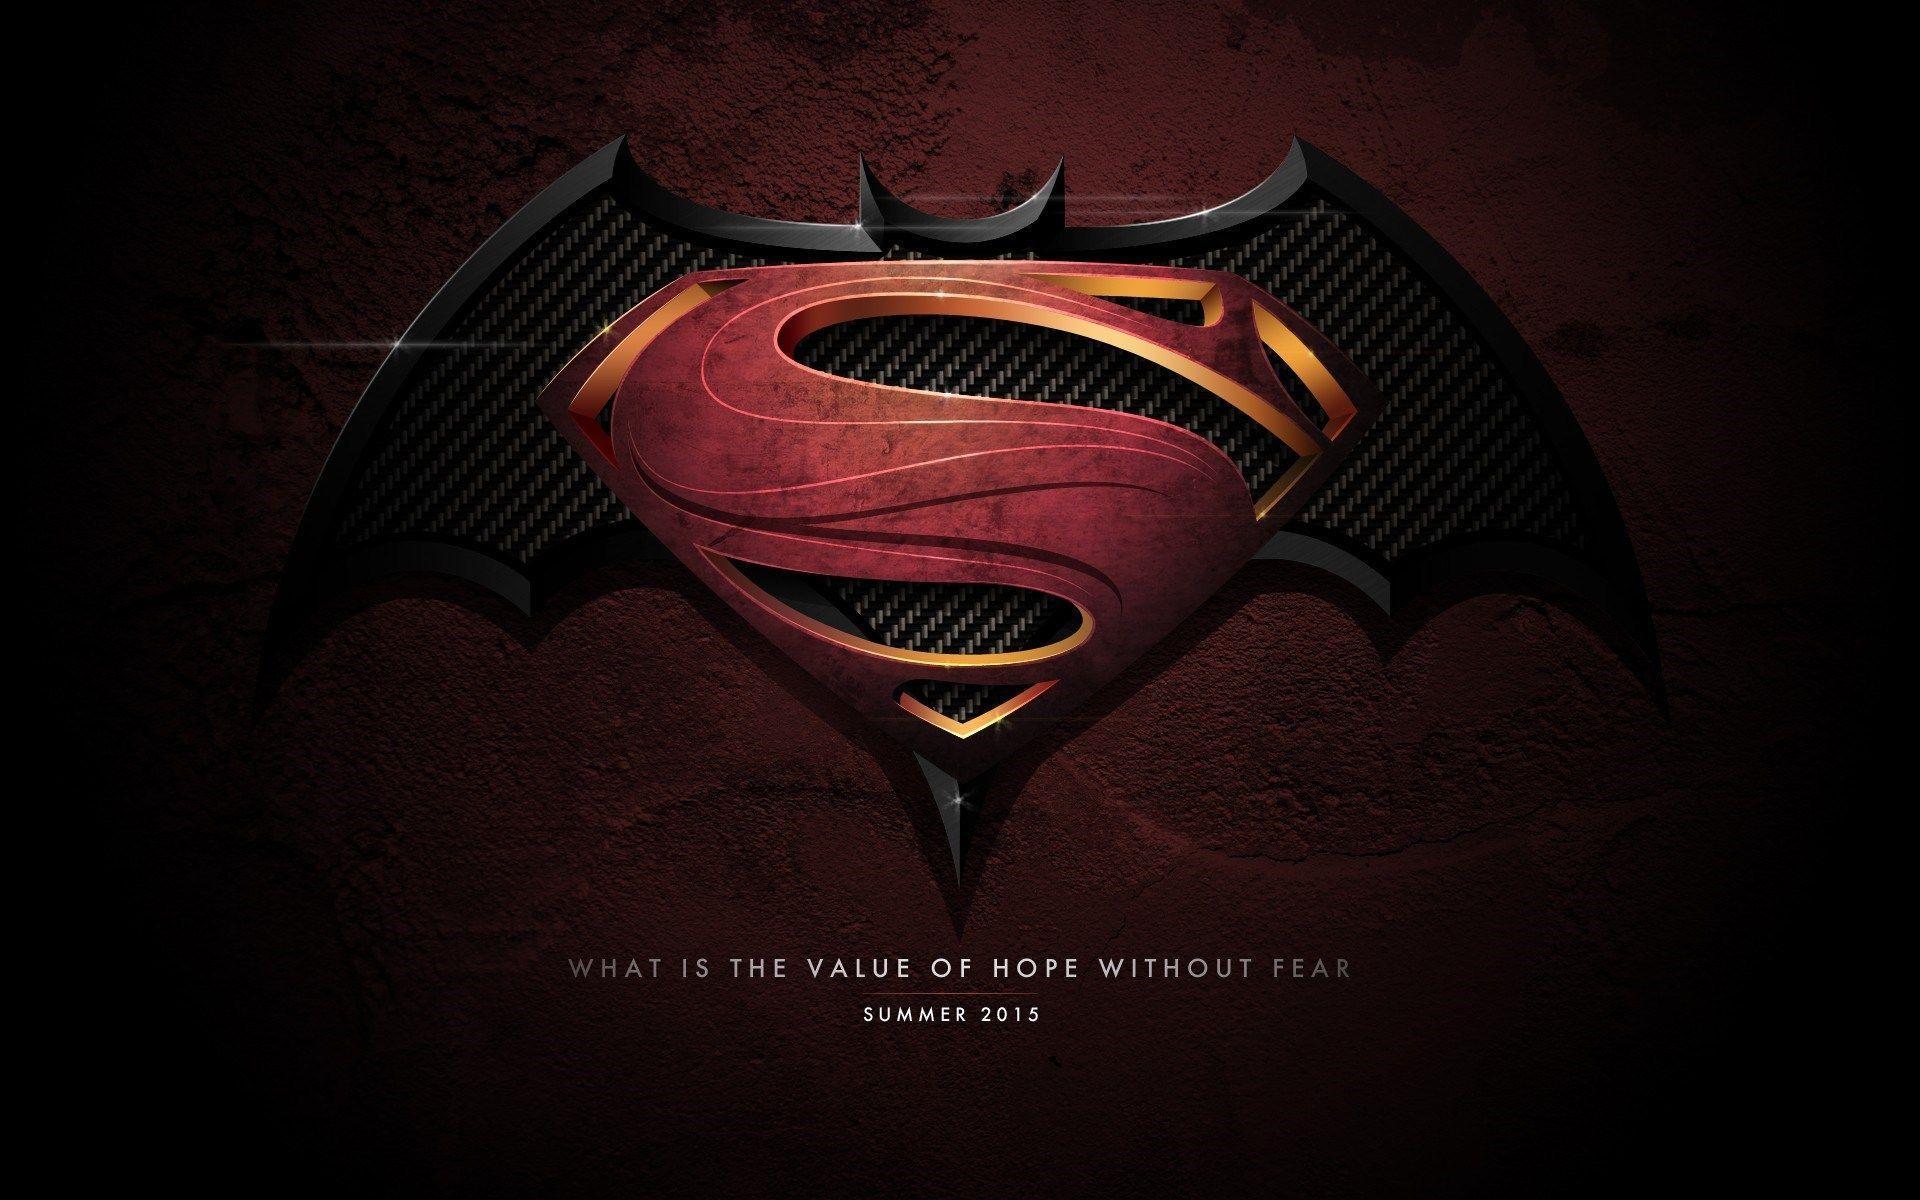 superman and batman logo wallpaper 4398 - Image And Wallpaper